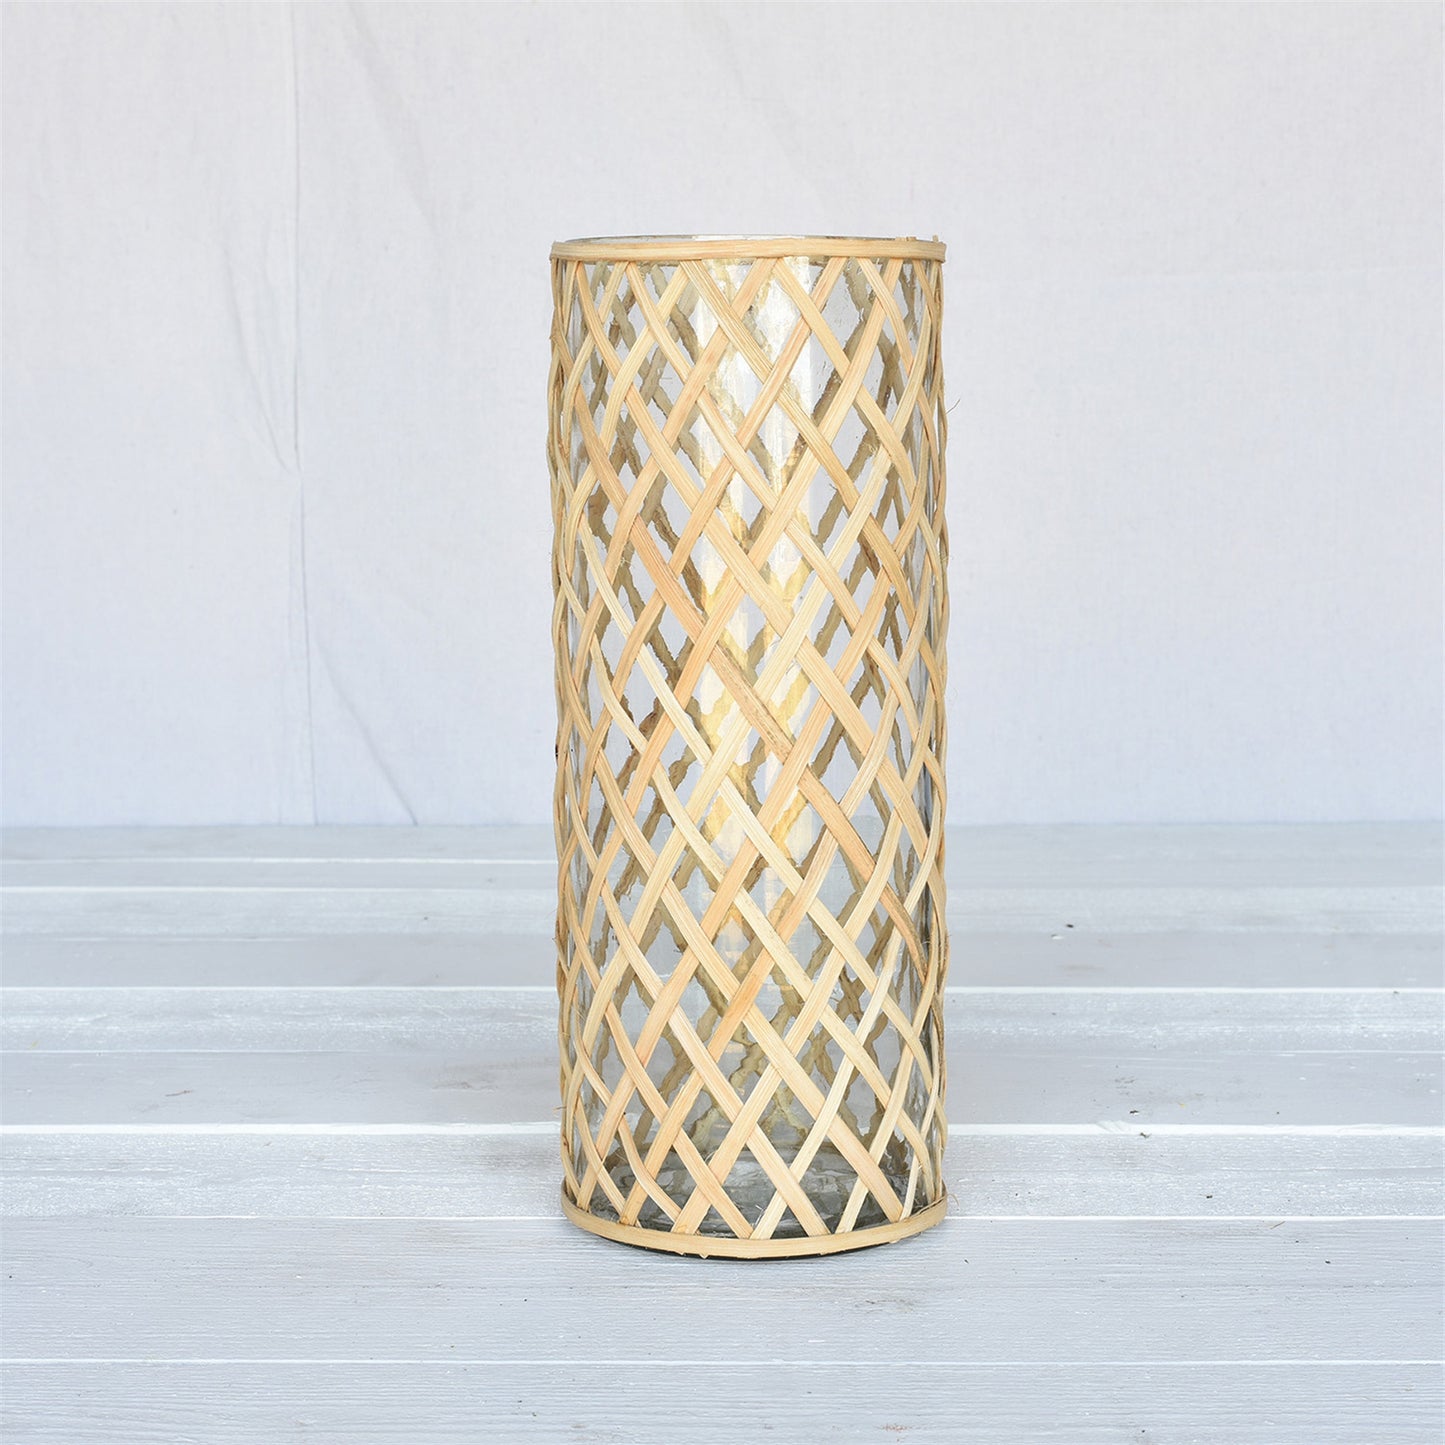 Woven Cane Vase